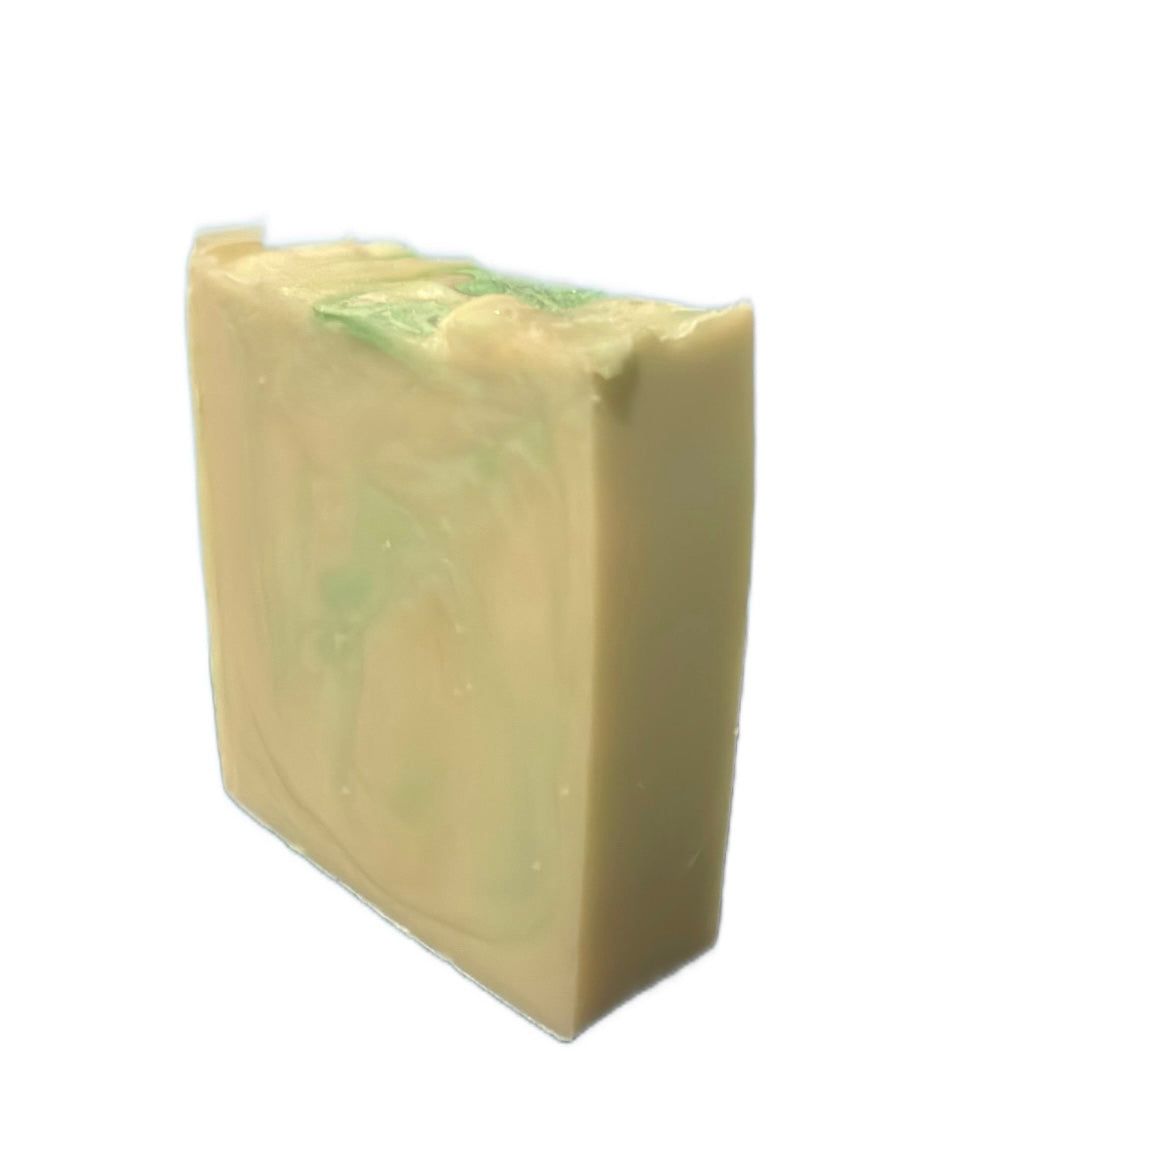 Pineapple Sage Soap